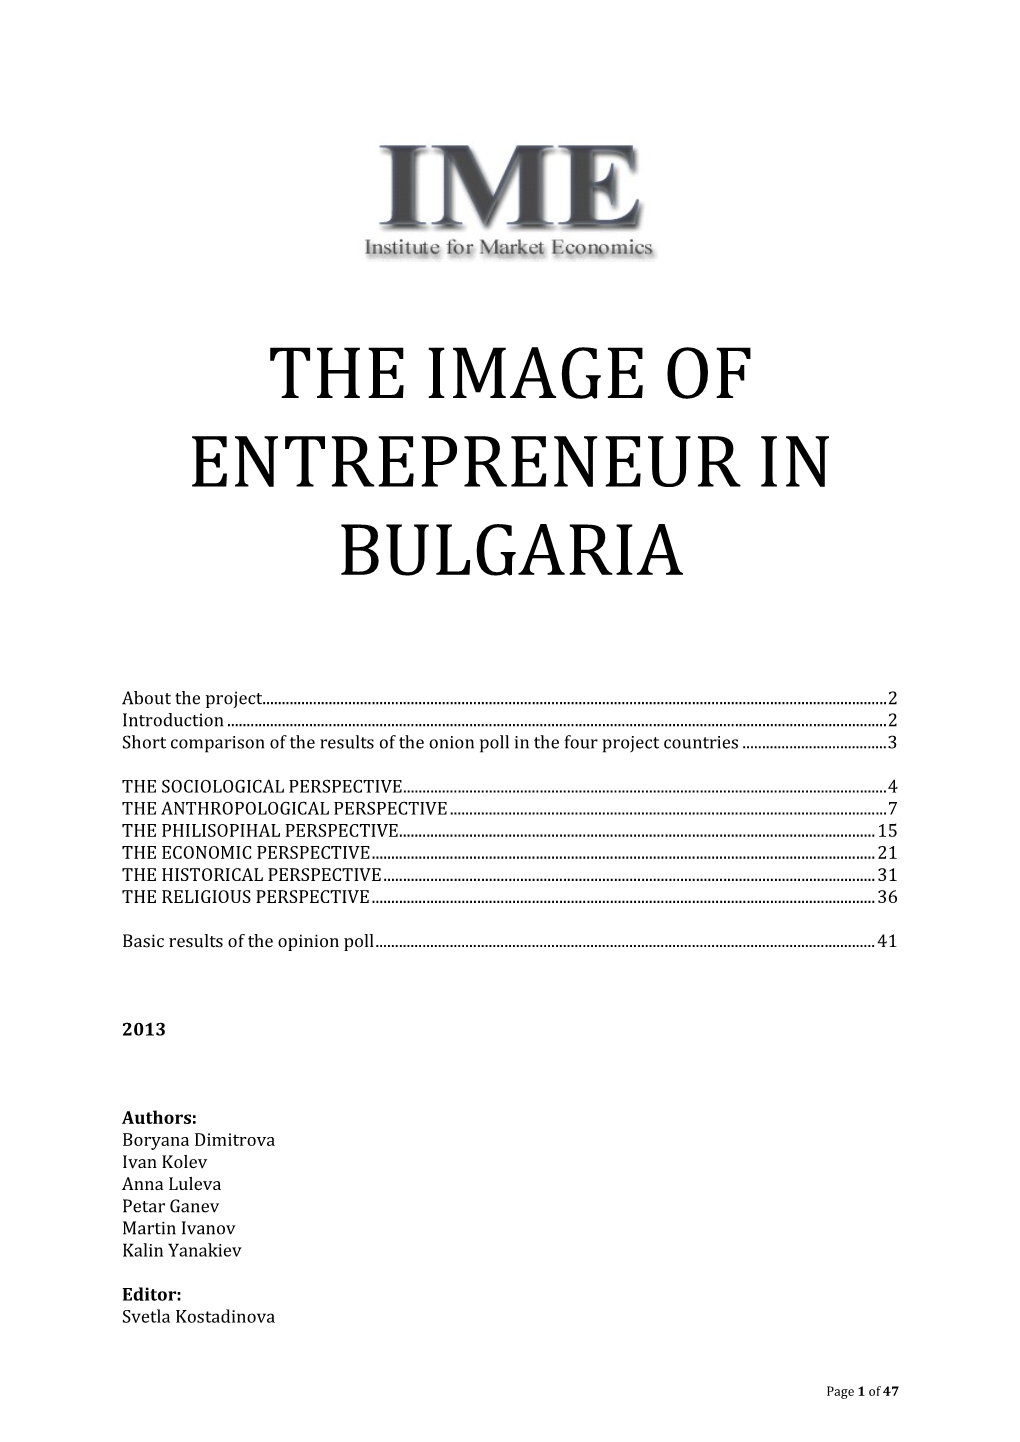 The Image of Entrepreneur in Bulgaria